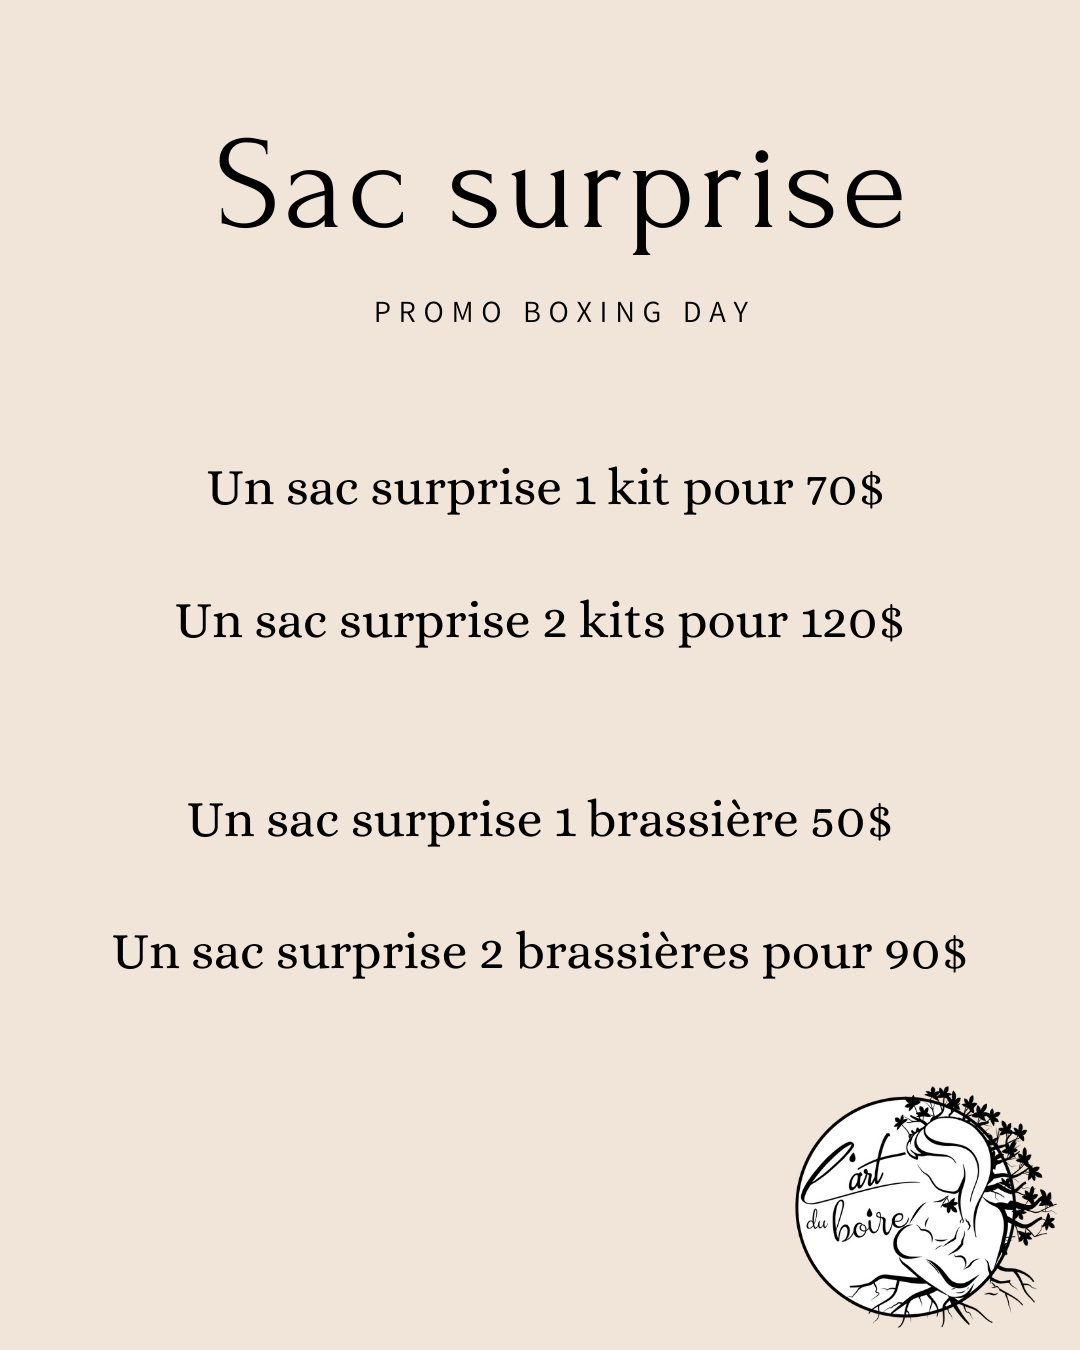 Sac surprise Boxing day